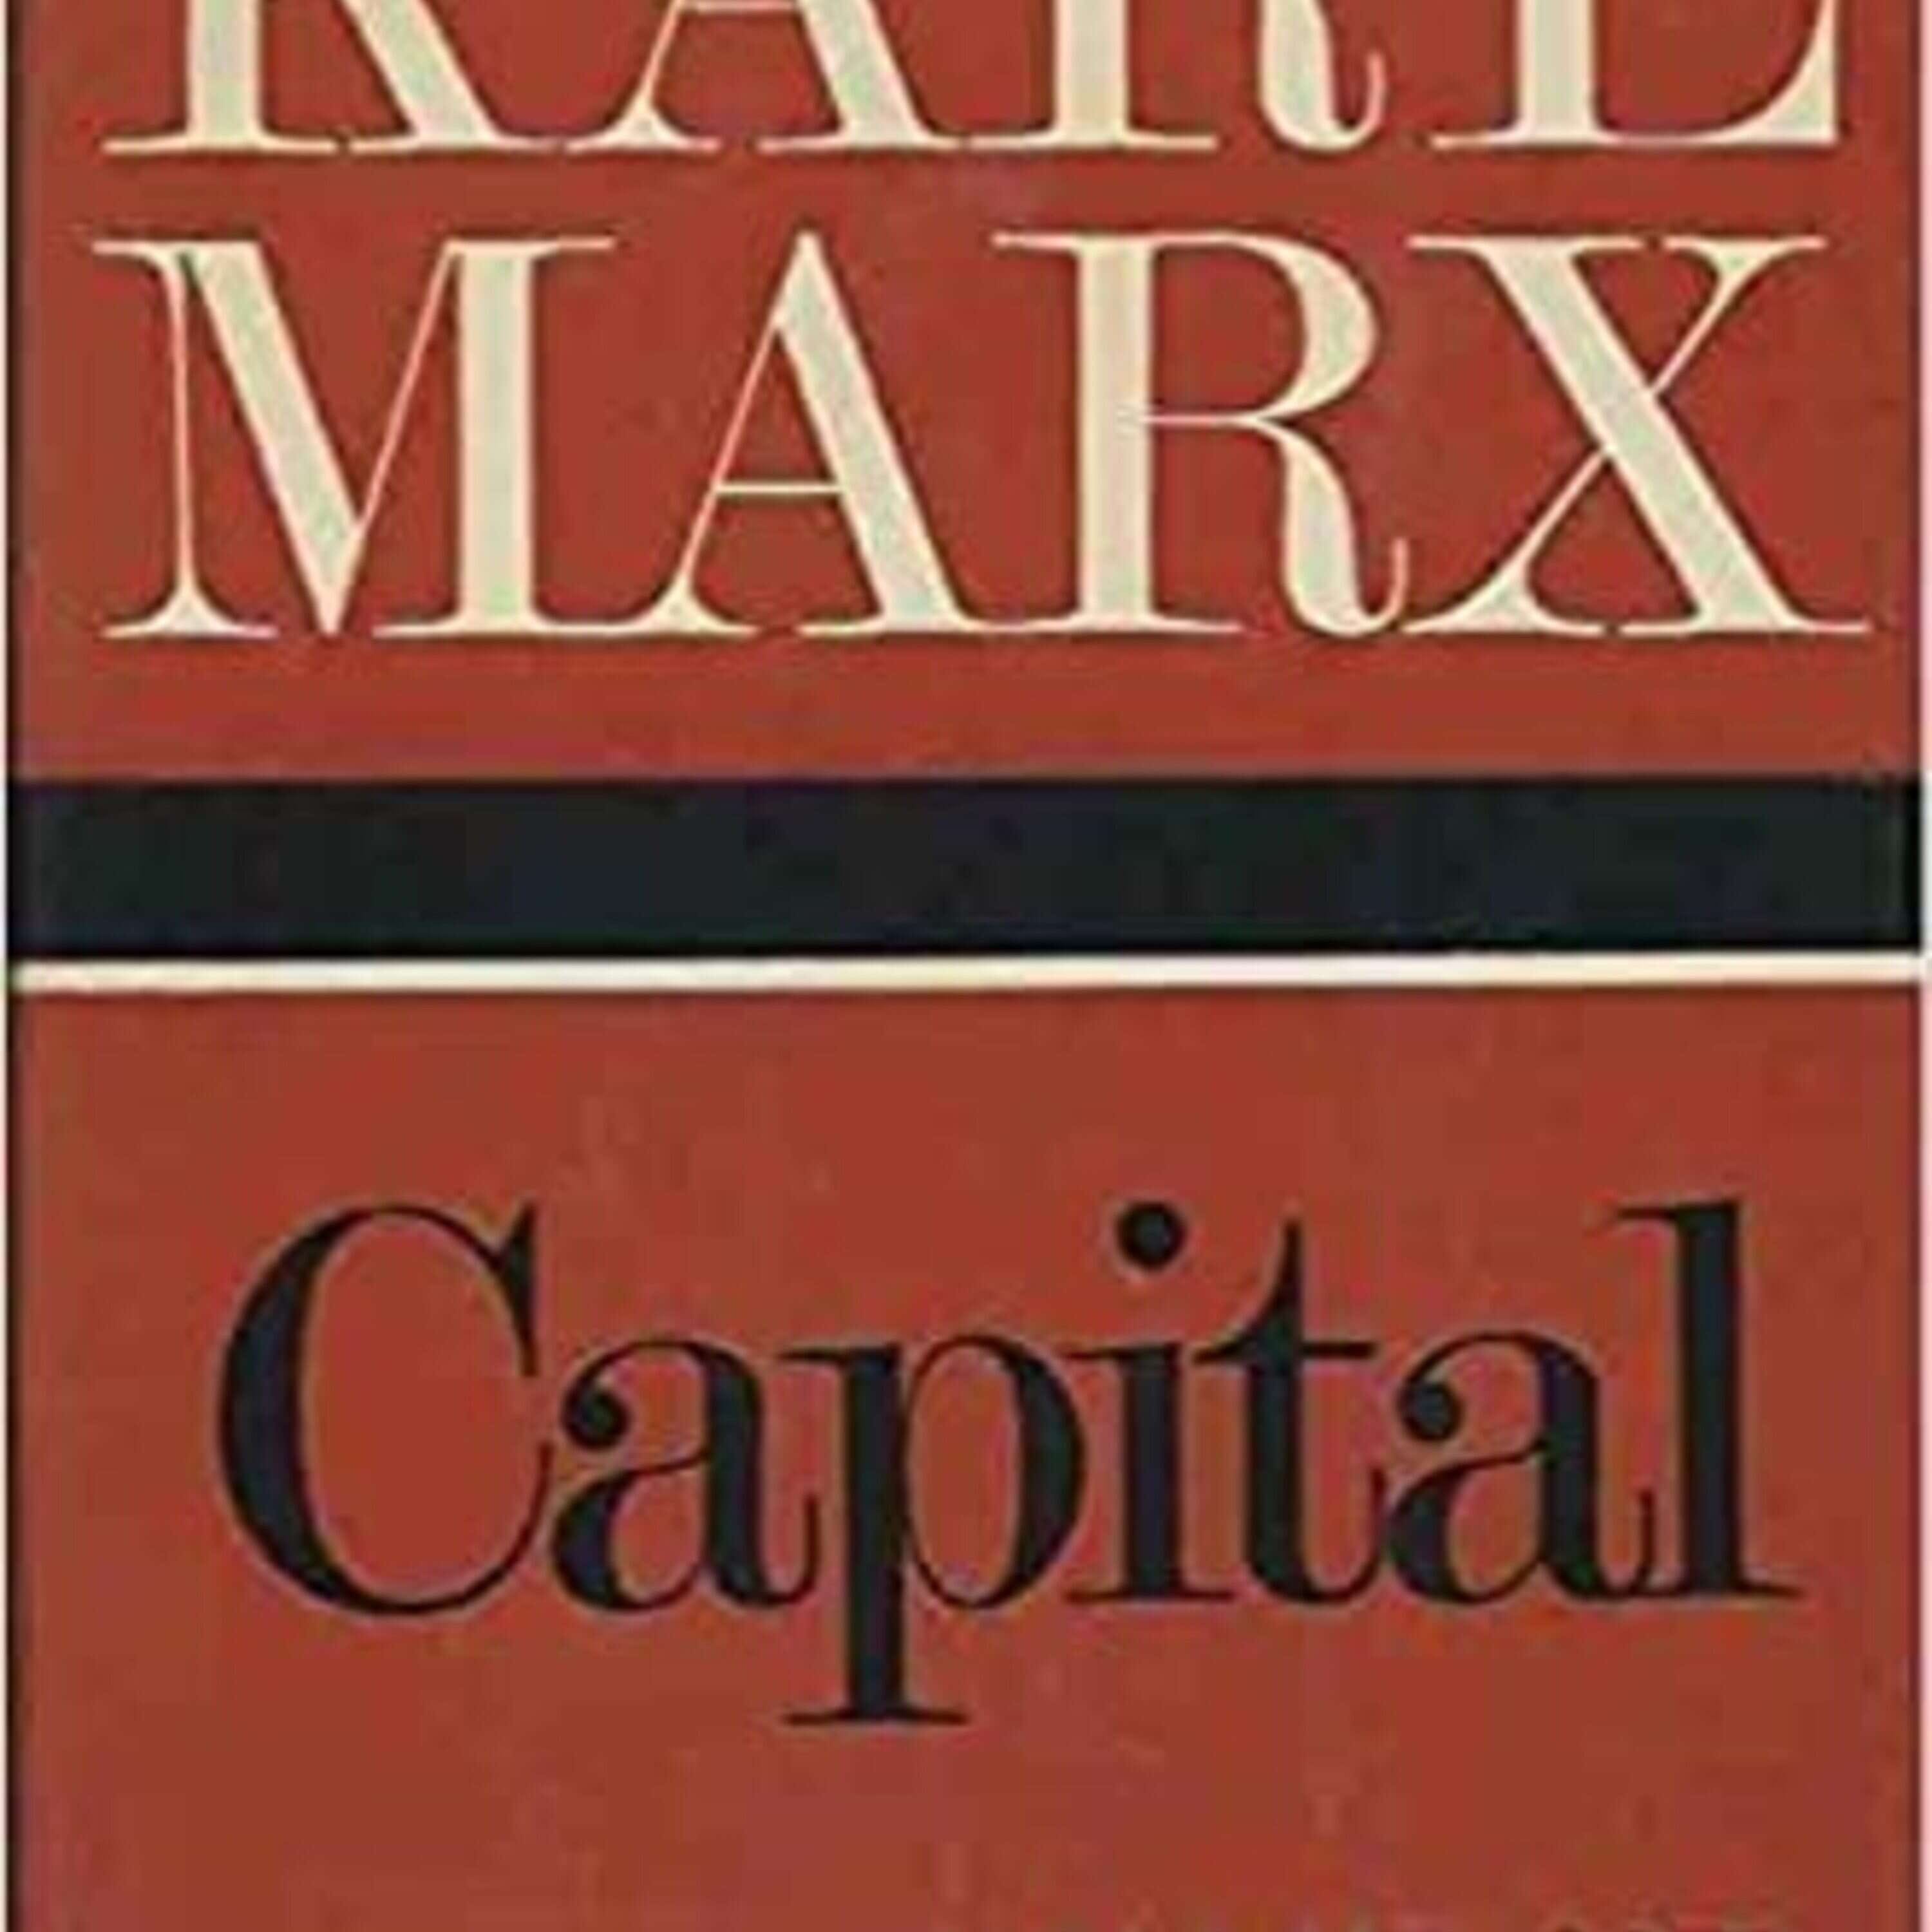 Part Two - Capital, Vol 1; Karl Marx